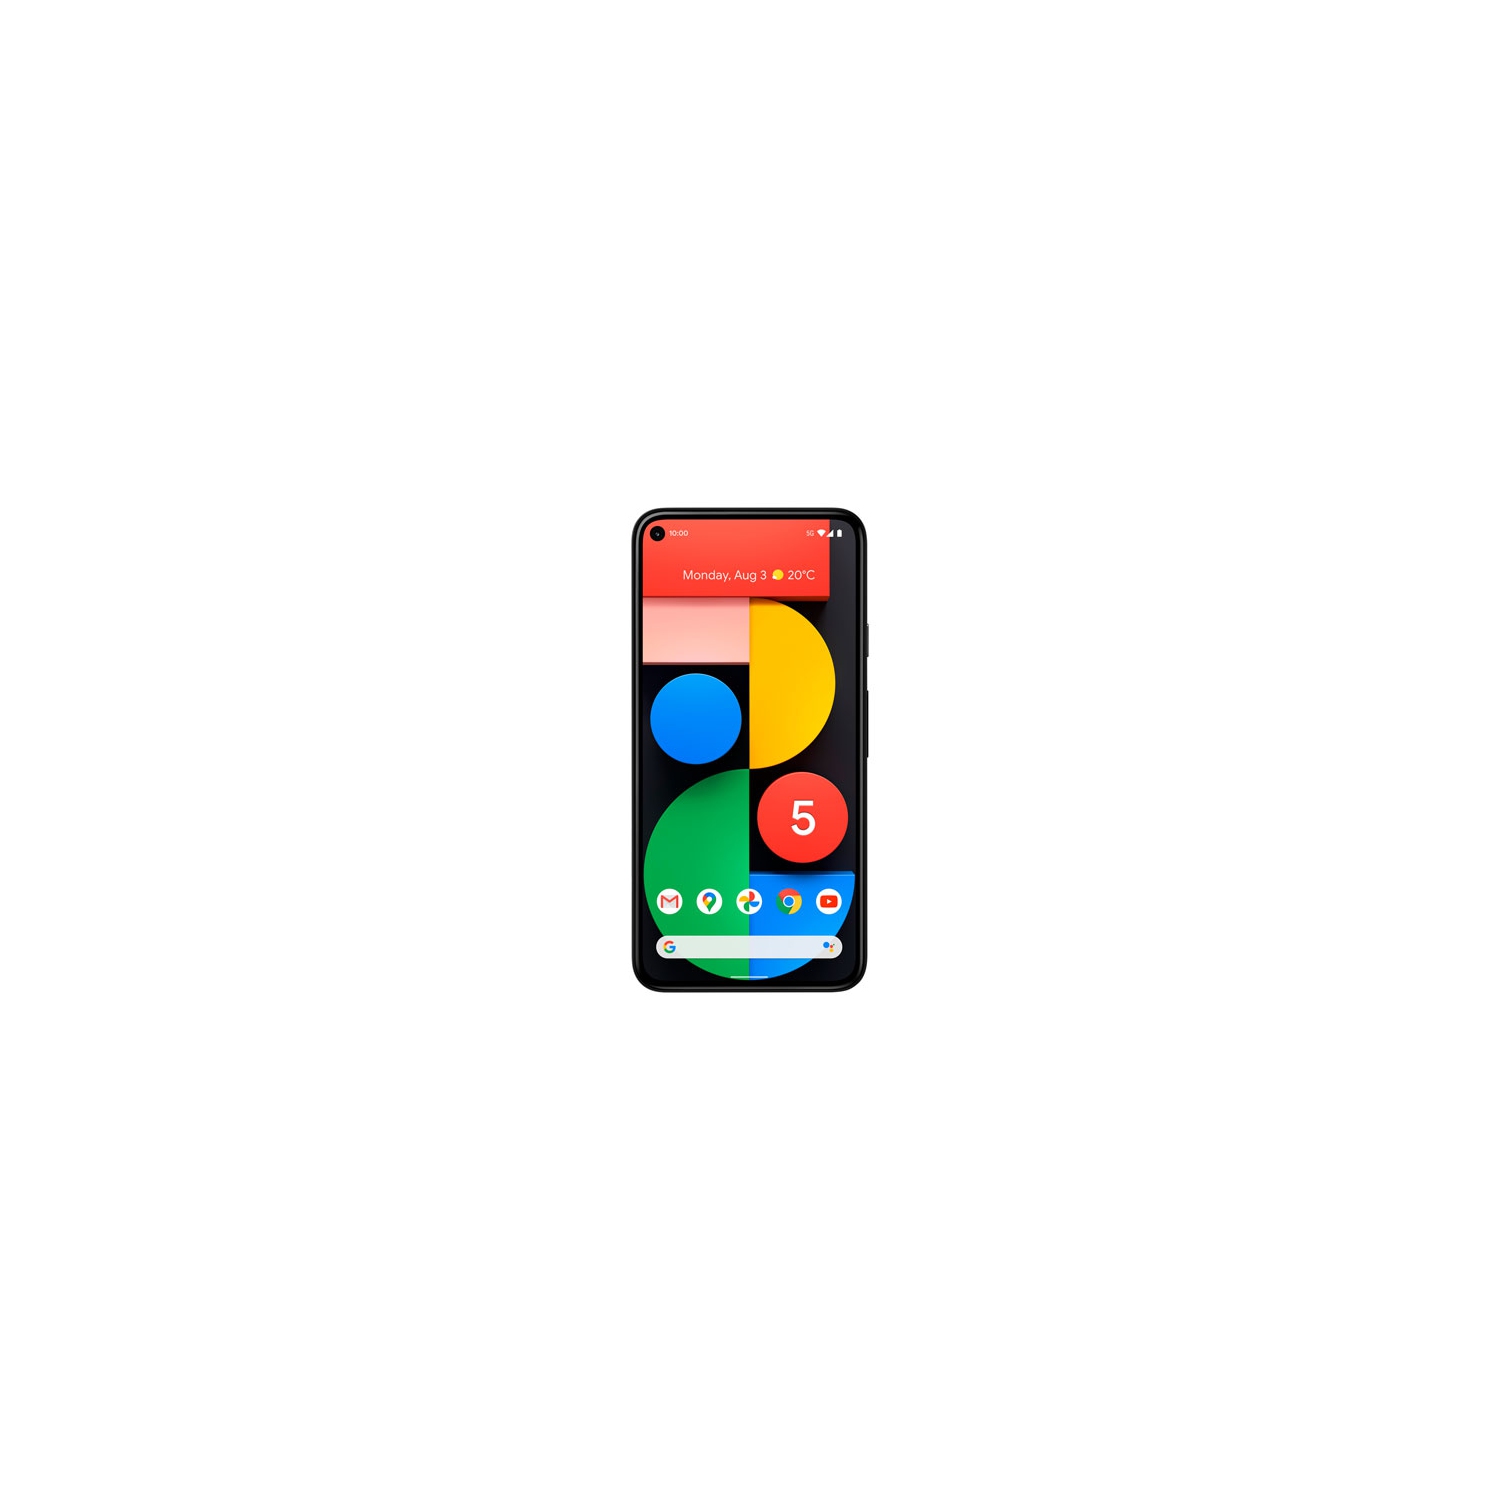 Google Pixel 5 128GB Smartphone - Just Black - Unlocked - Open Box